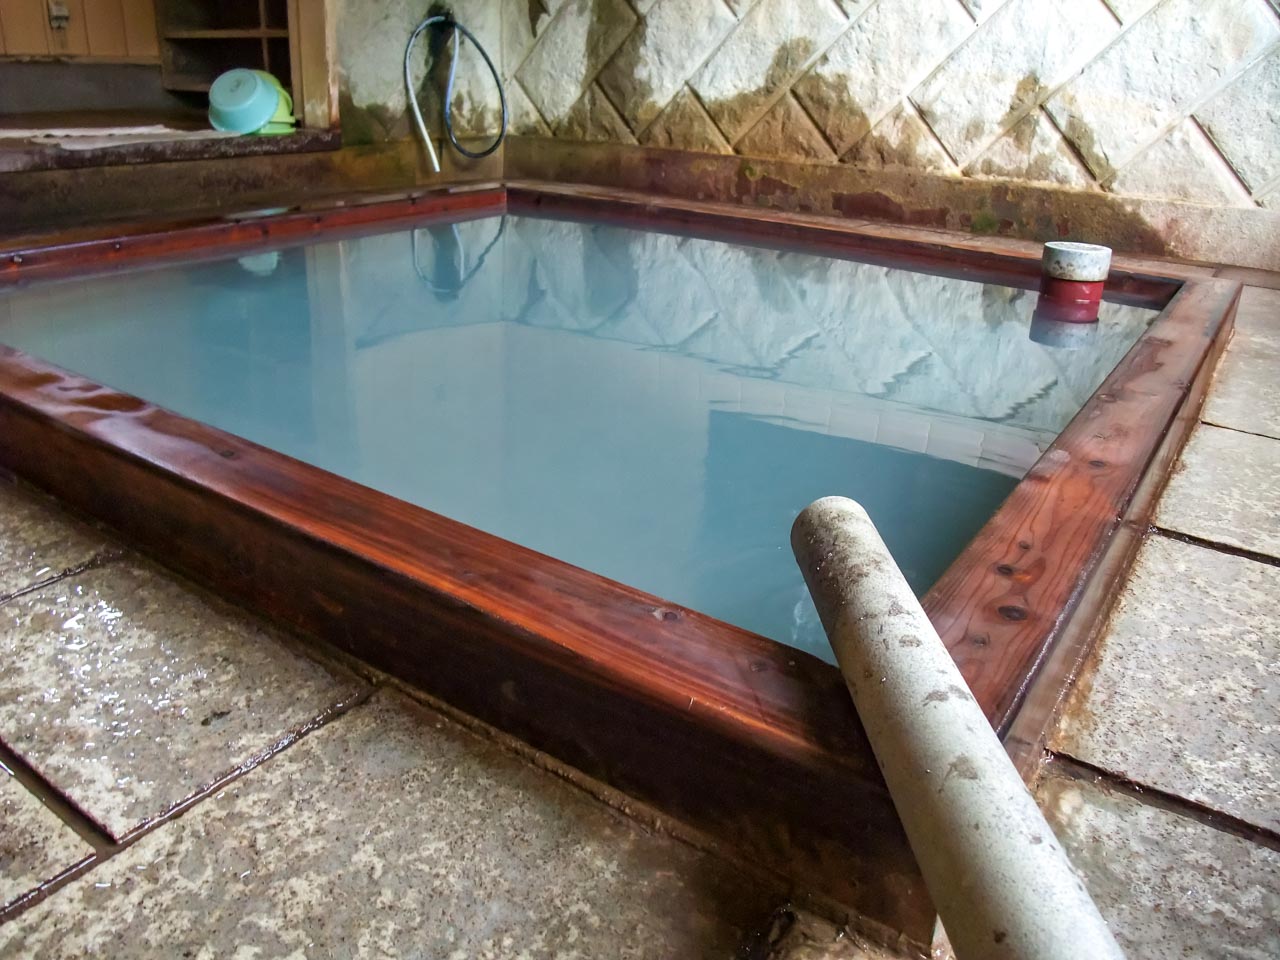 Kakujyusen public bath in Beppu Myoban onsen,Oita,Japan